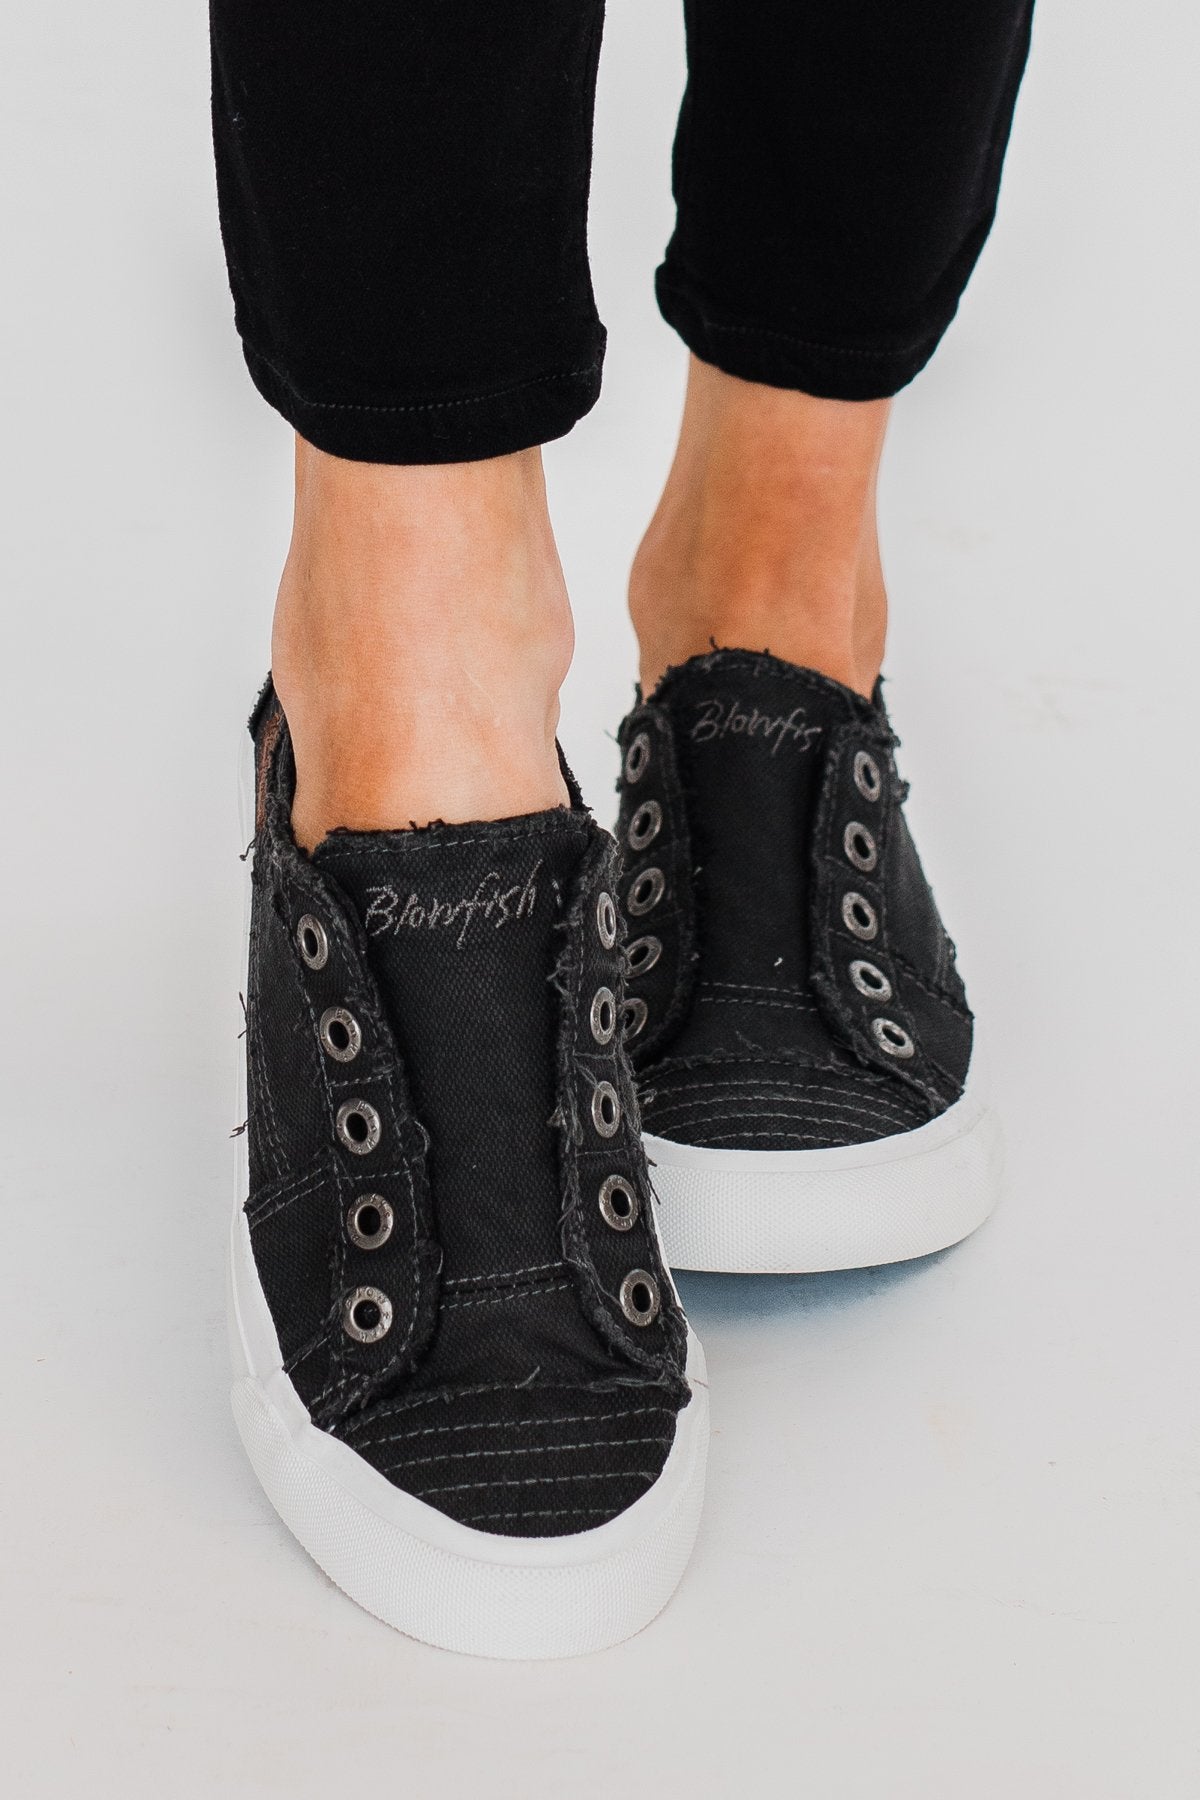 black blowfish shoes